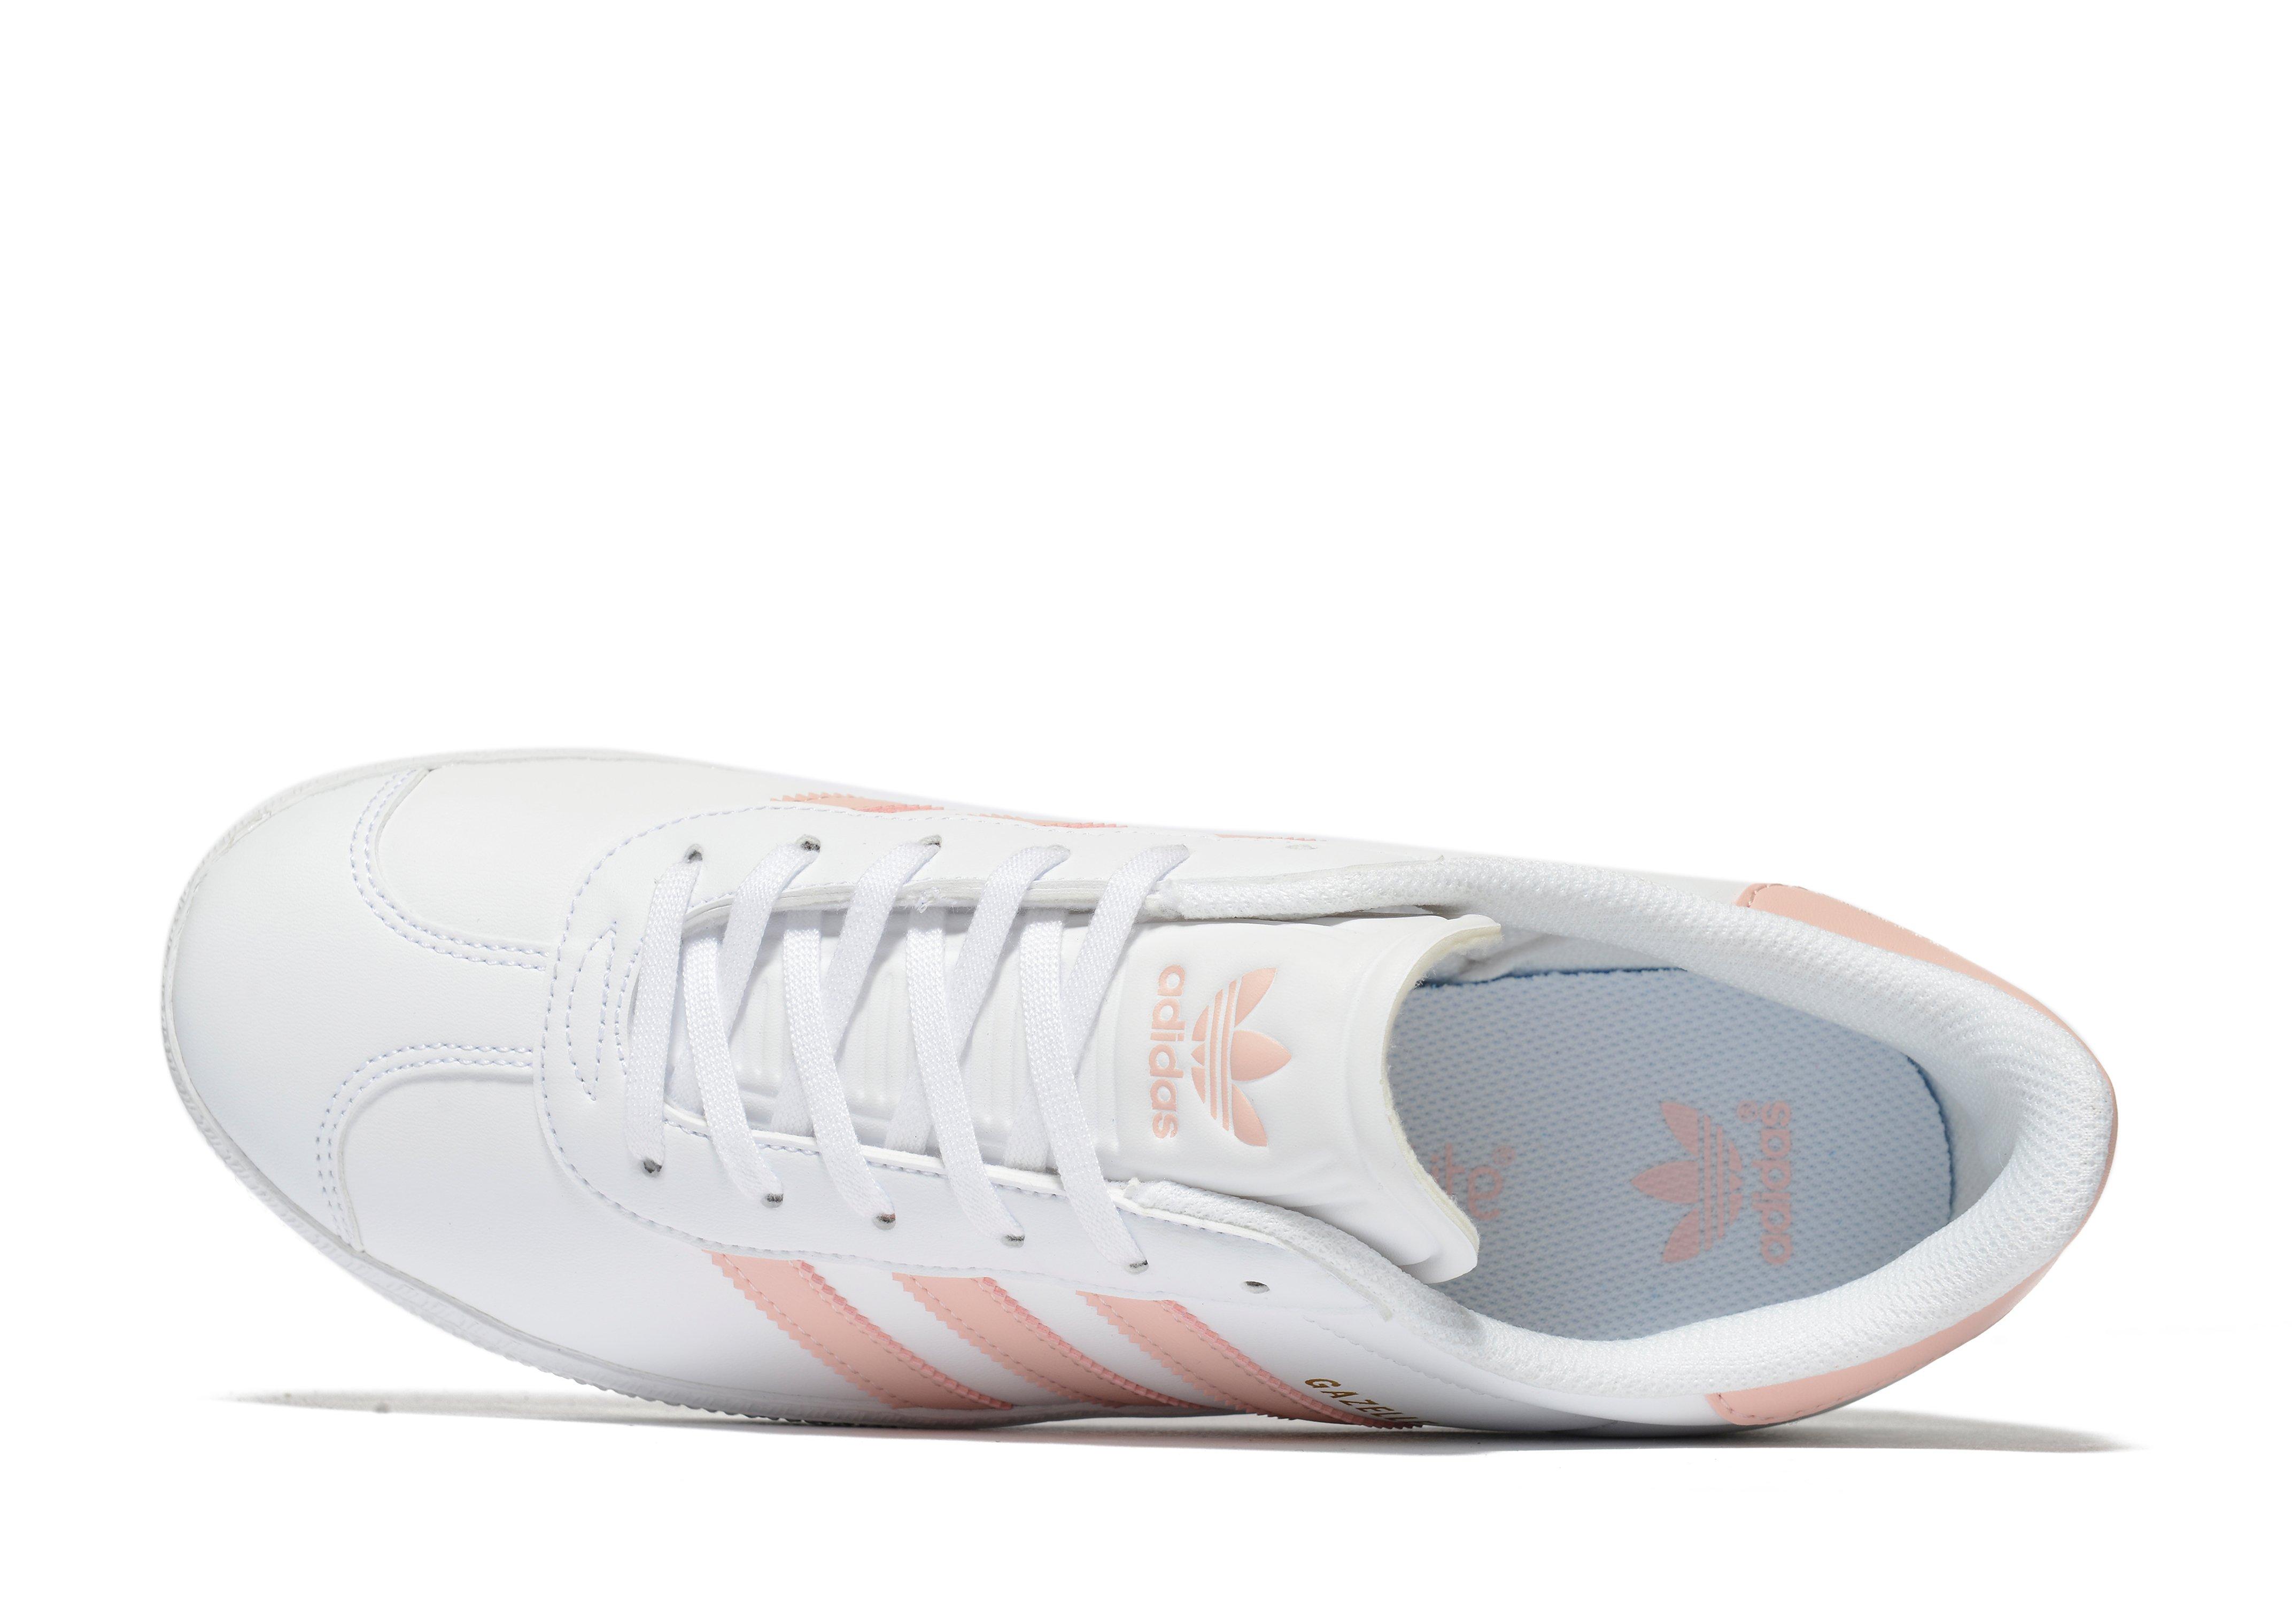 adidas gazelle white and pink